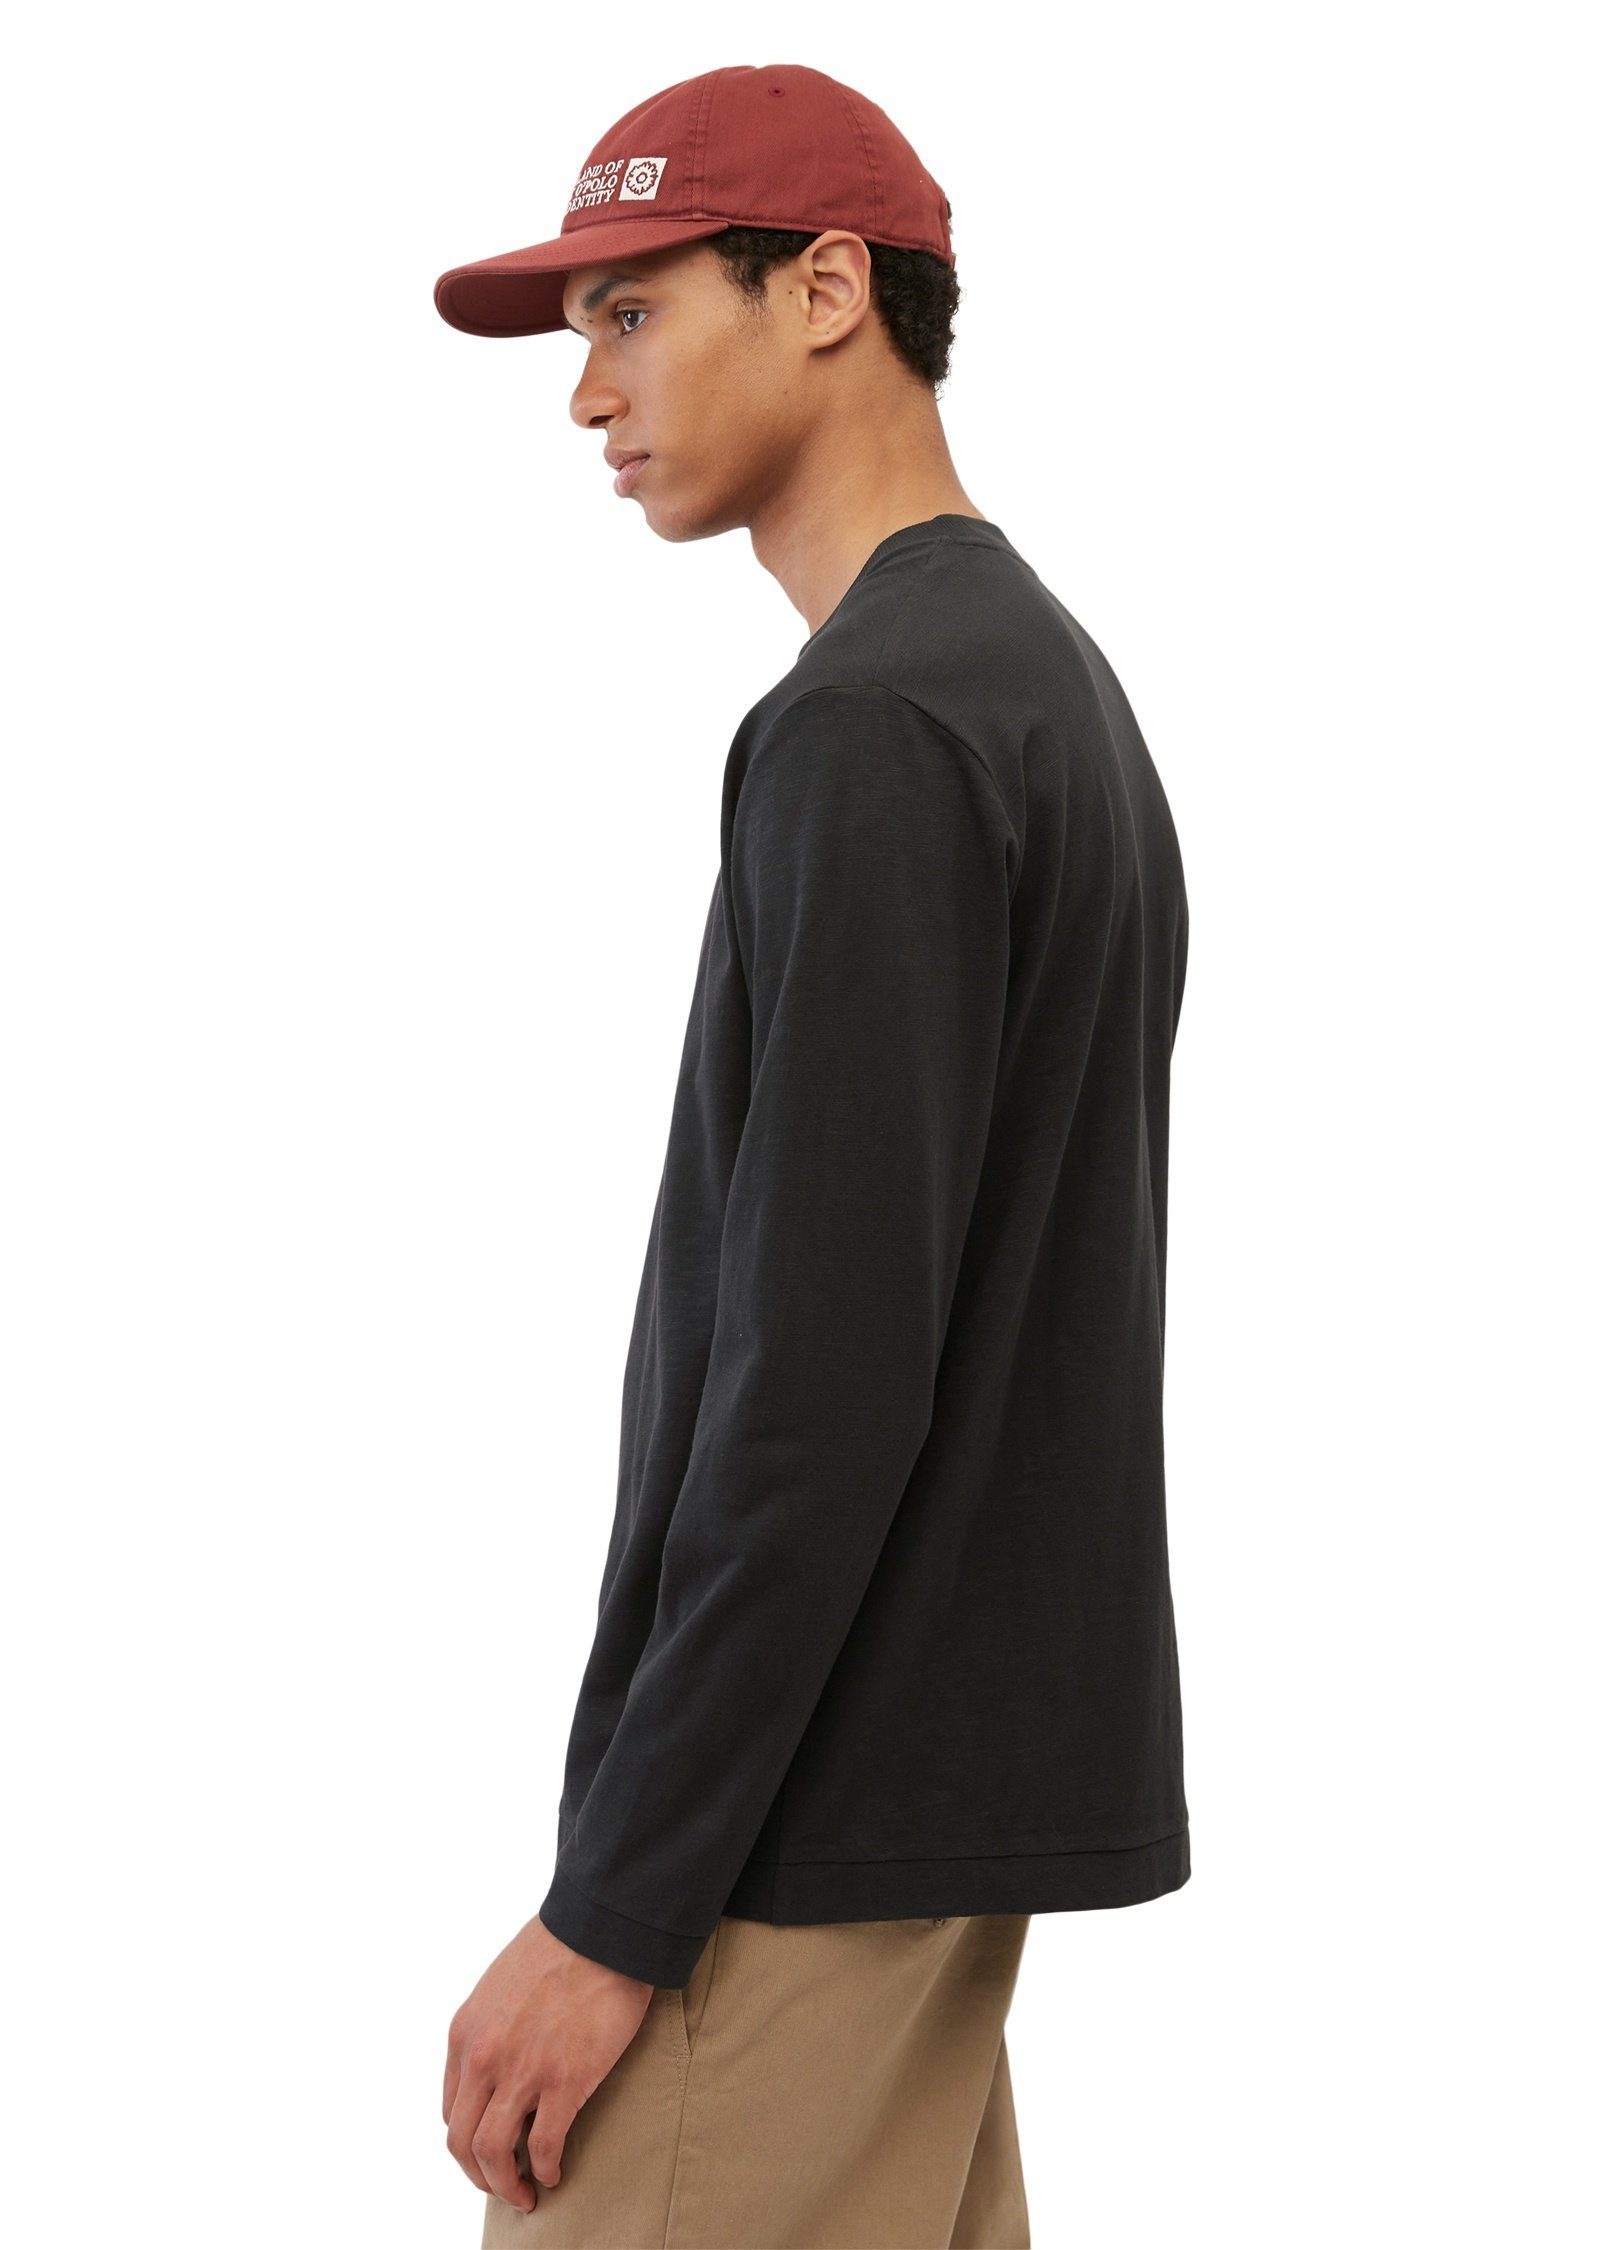 Marc O'Polo Langarmshirt aus Bio-Baumwolle schwarz reiner